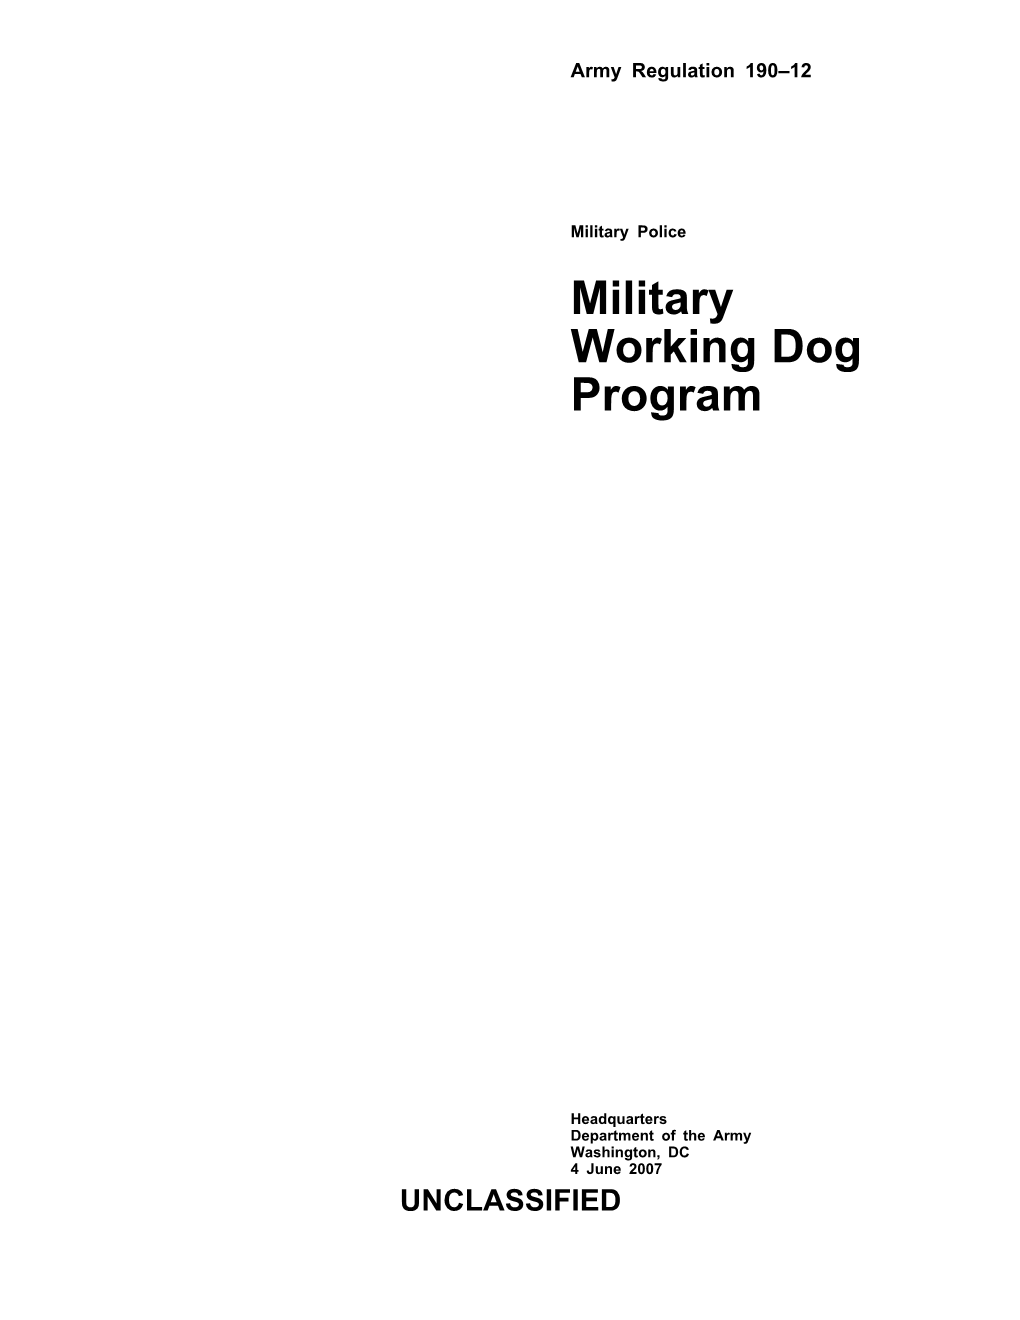 AR 190-12 Military Working Dog Program